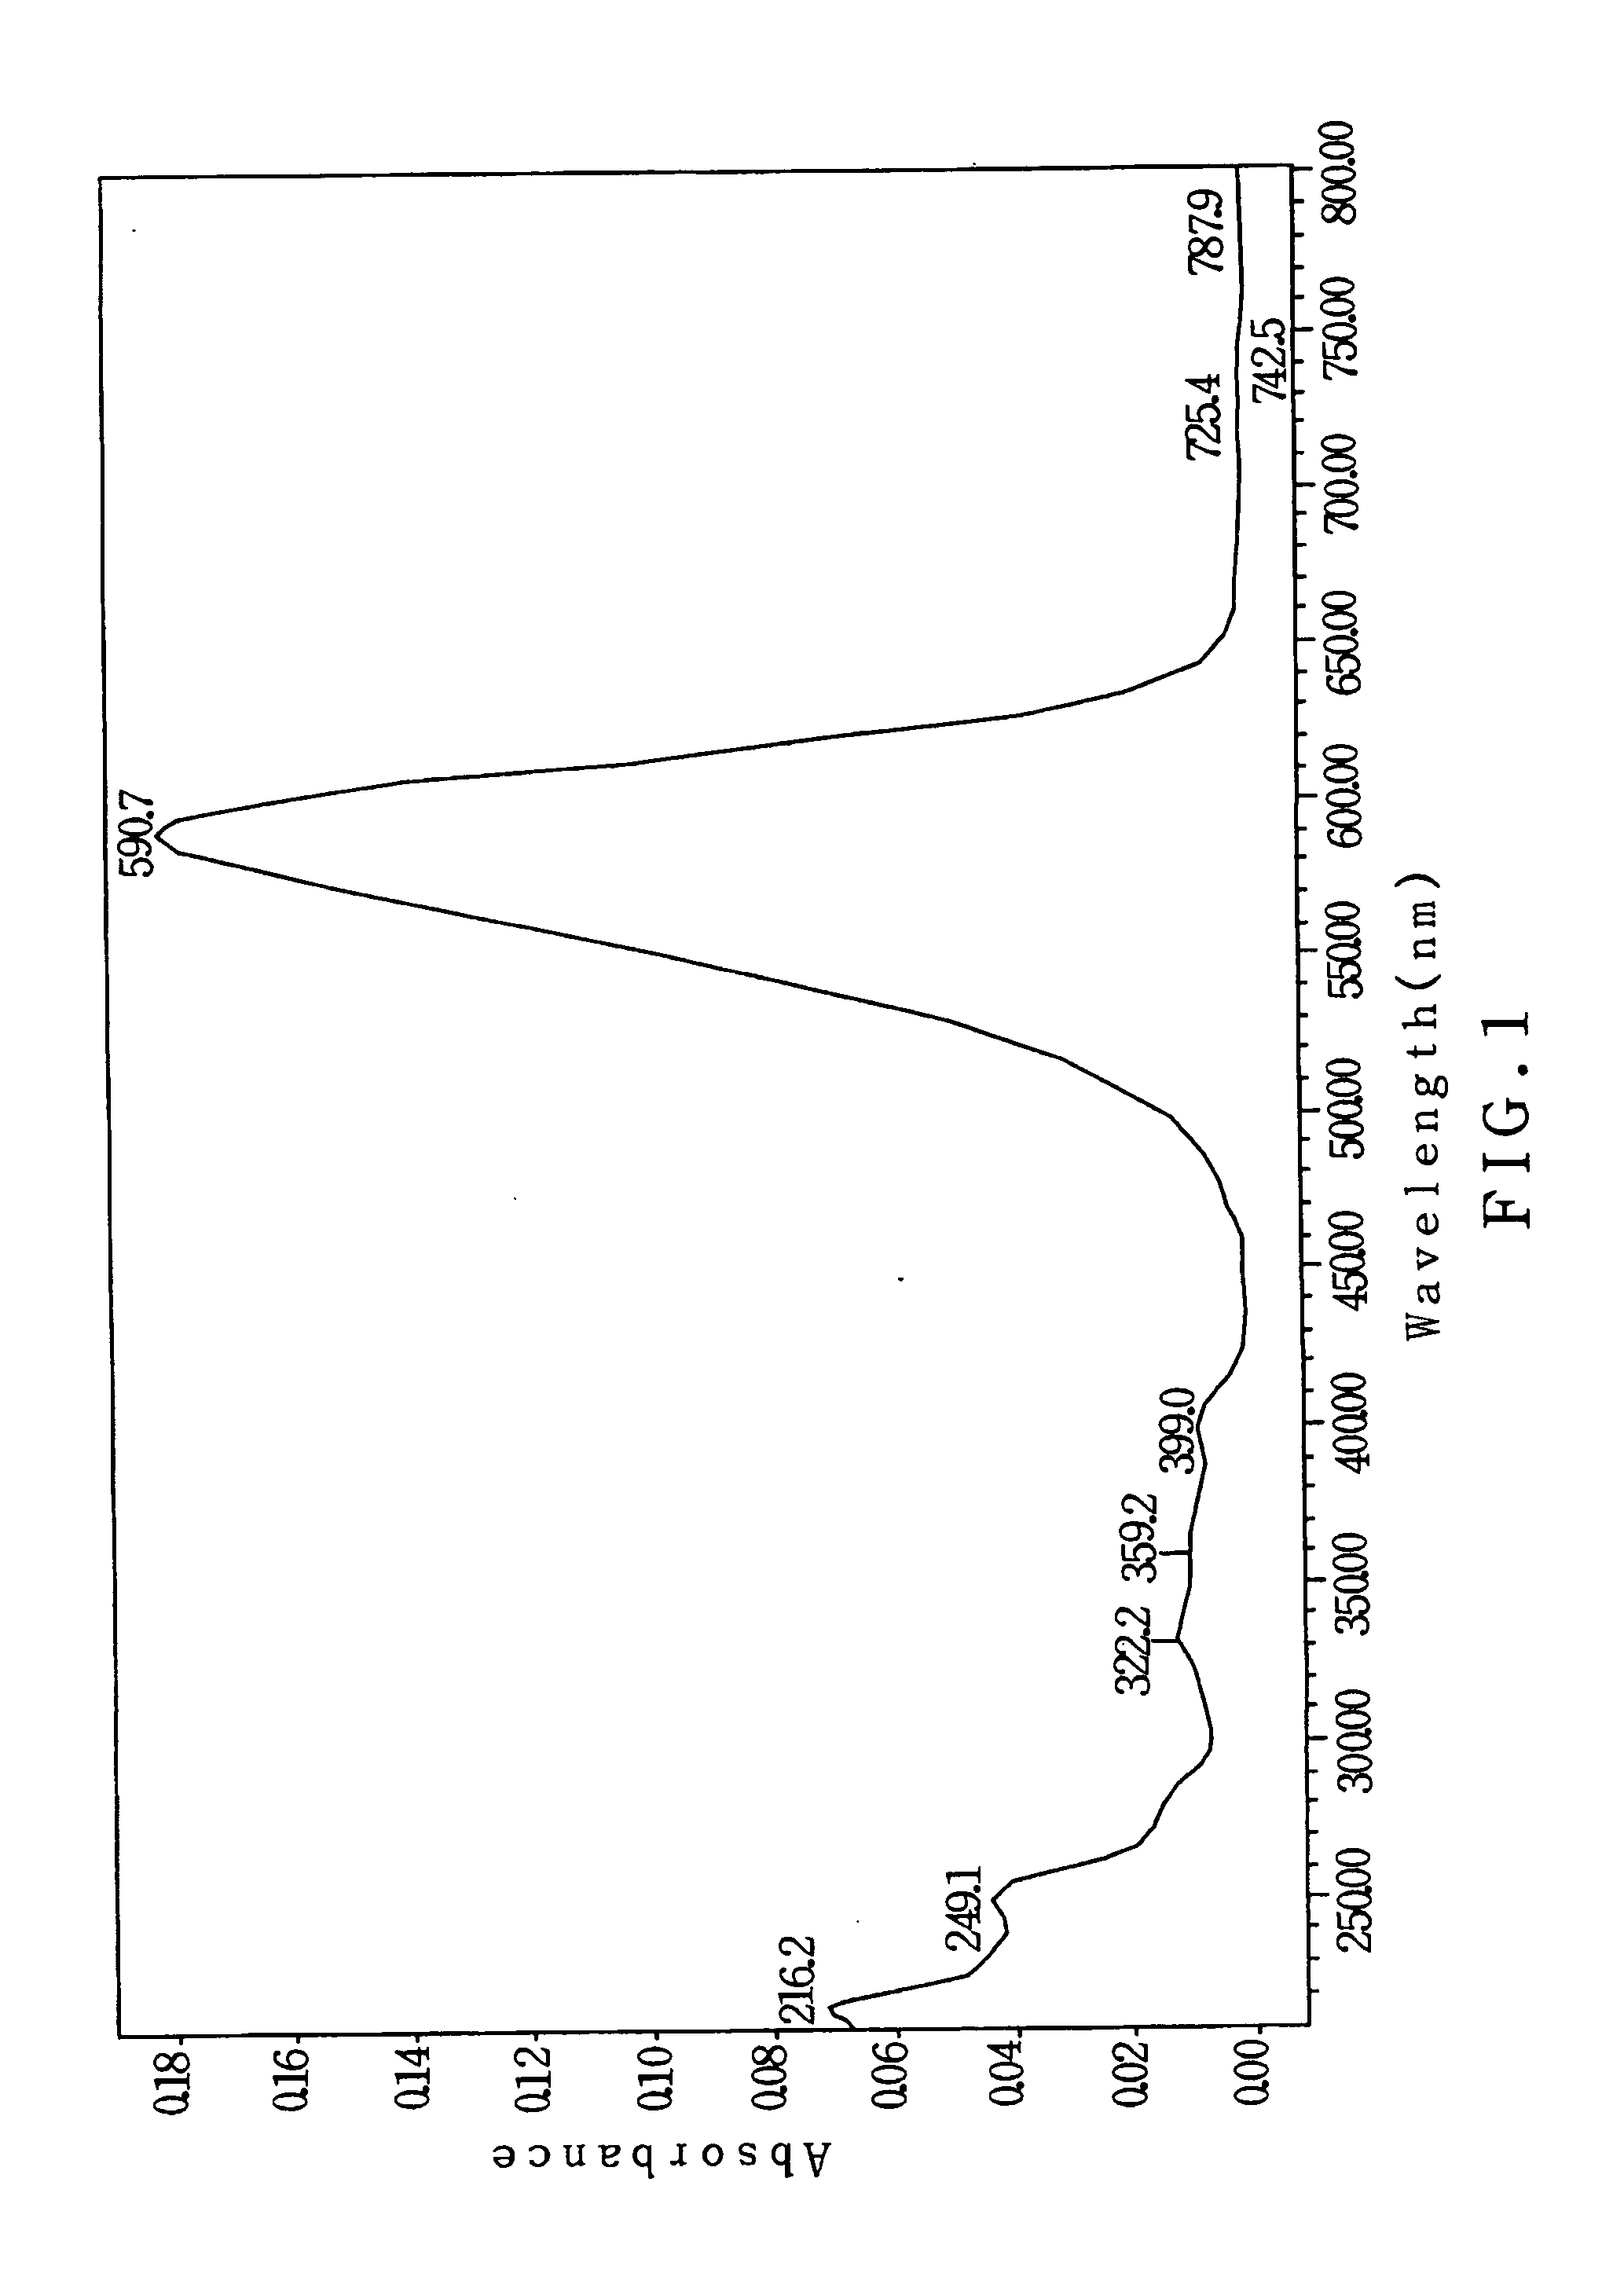 Dye composition of the optical recording medium